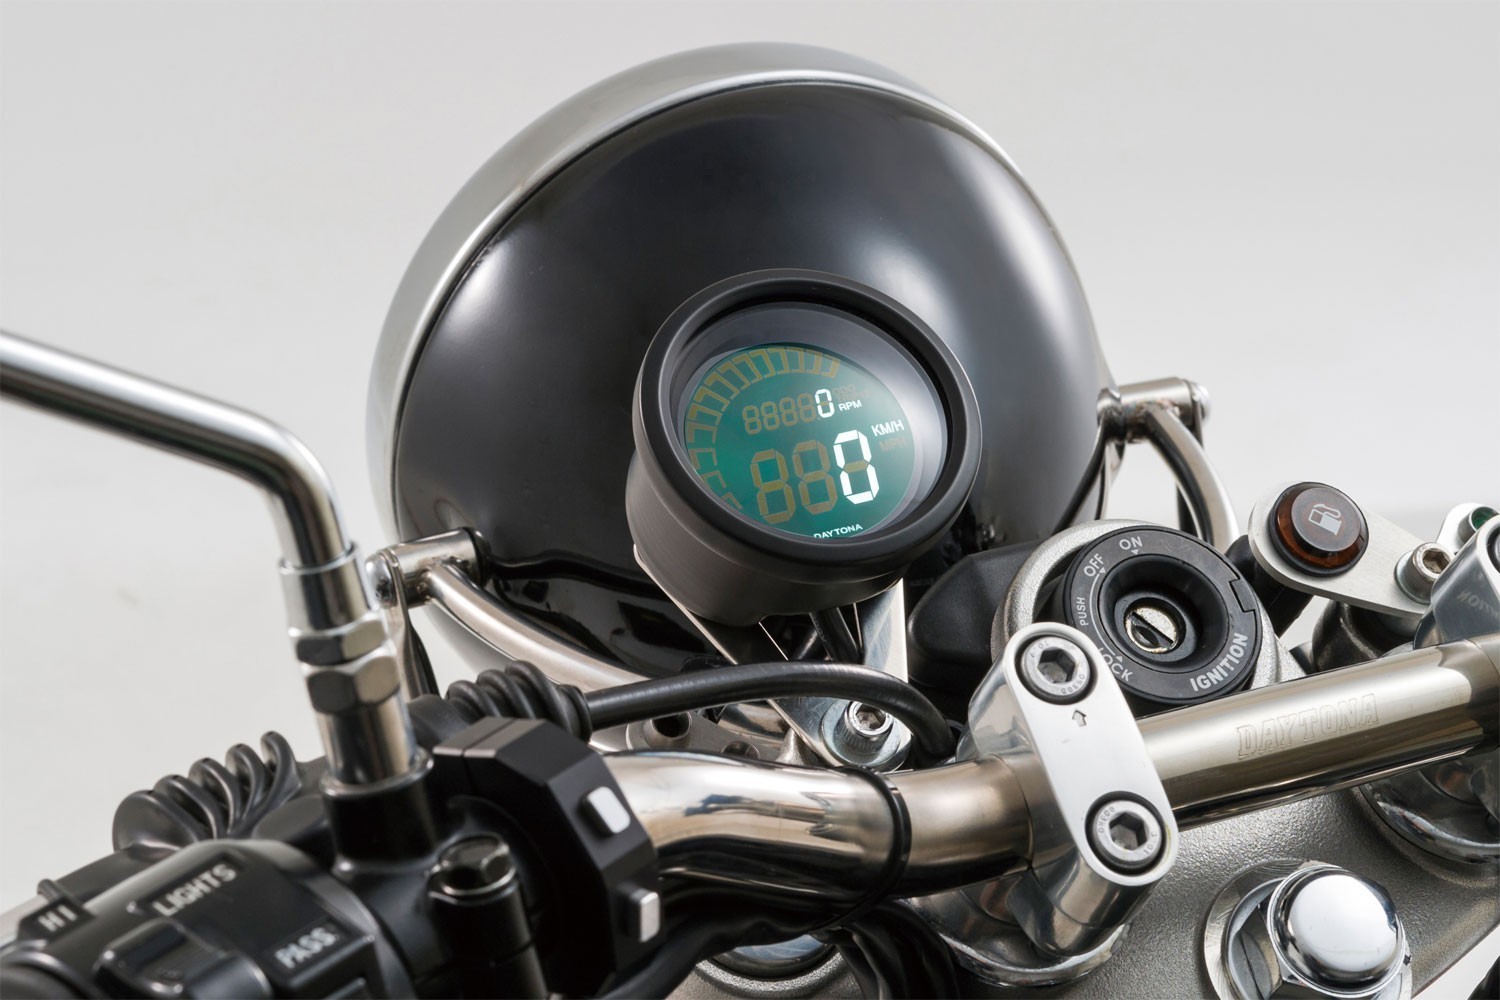 Compteur digital moto Daytona Asura - Compteurs - Guidons et